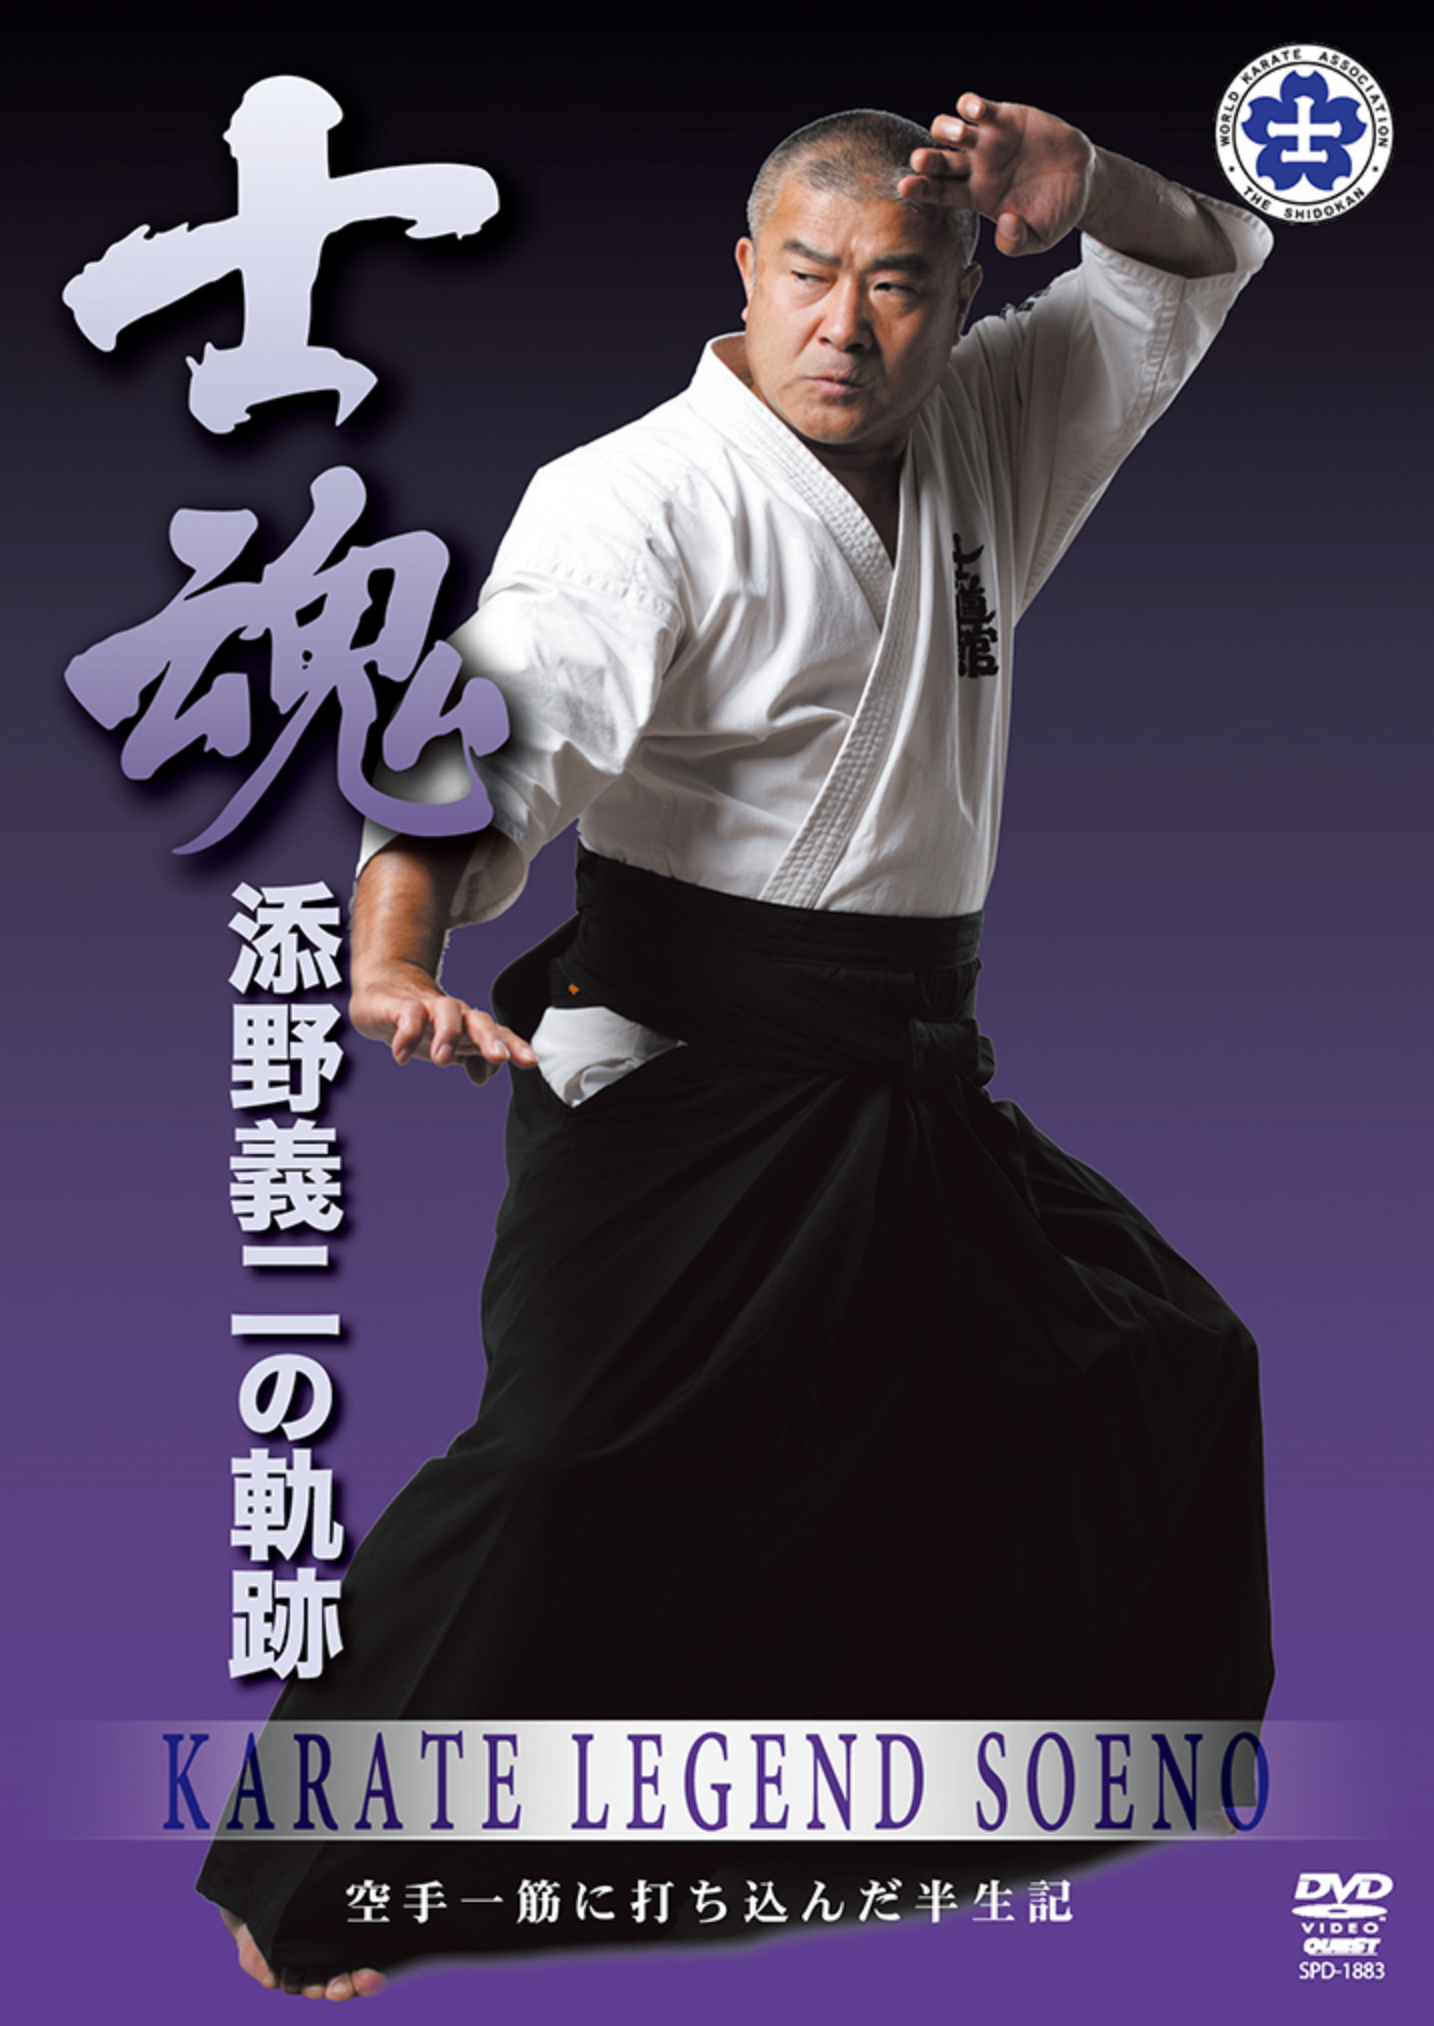 Karate Legend Yoshiji Soeno DVD - Budovideos Inc